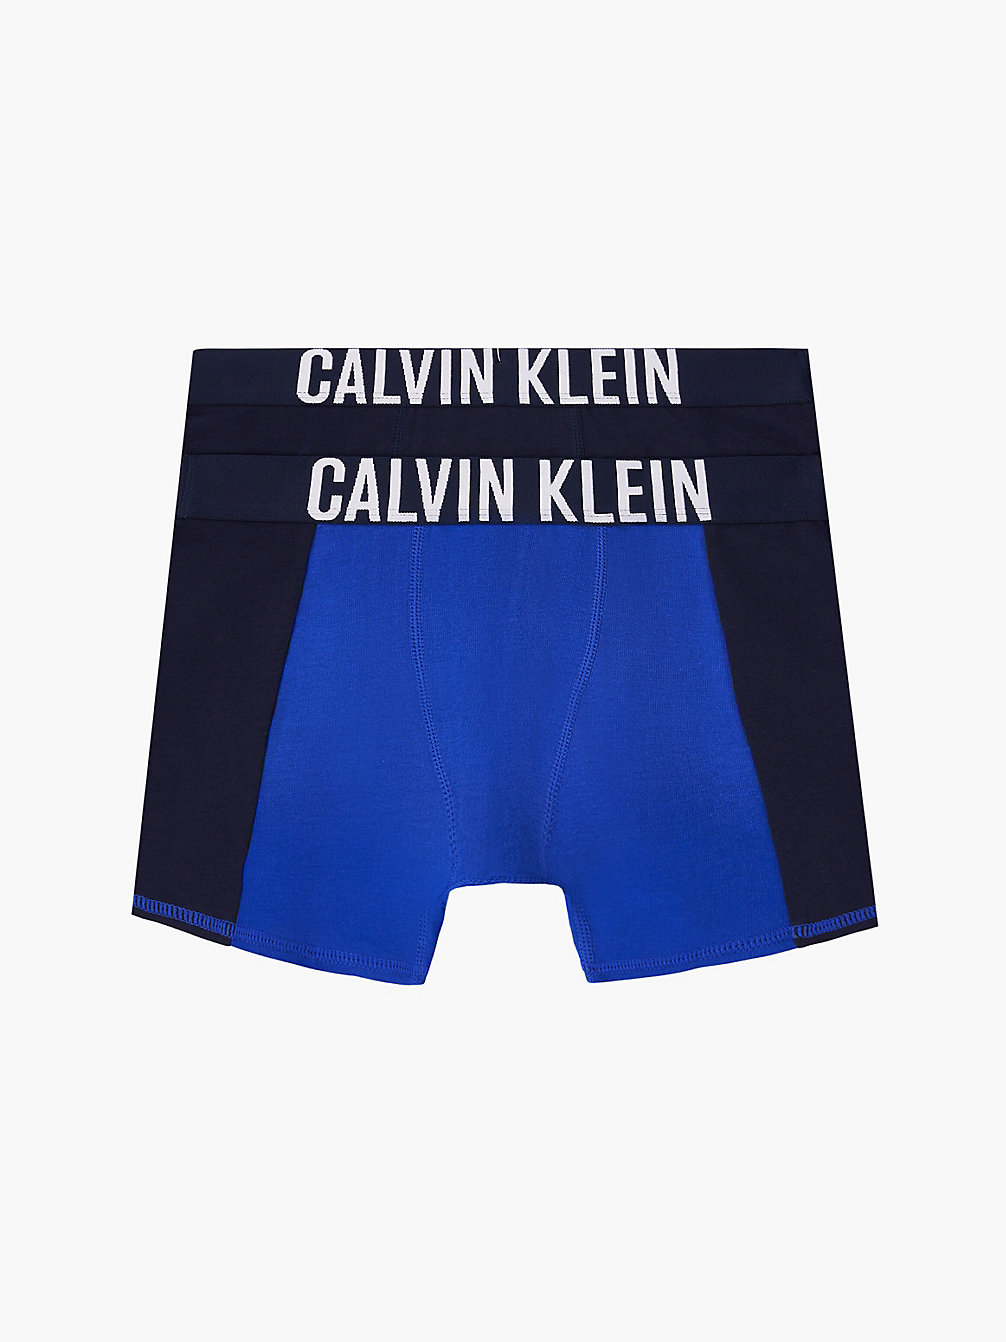 DEEPMARINE/NAVYIRIS 2 Pack Boys Boxer Briefs - Intense Power undefined boys Calvin Klein